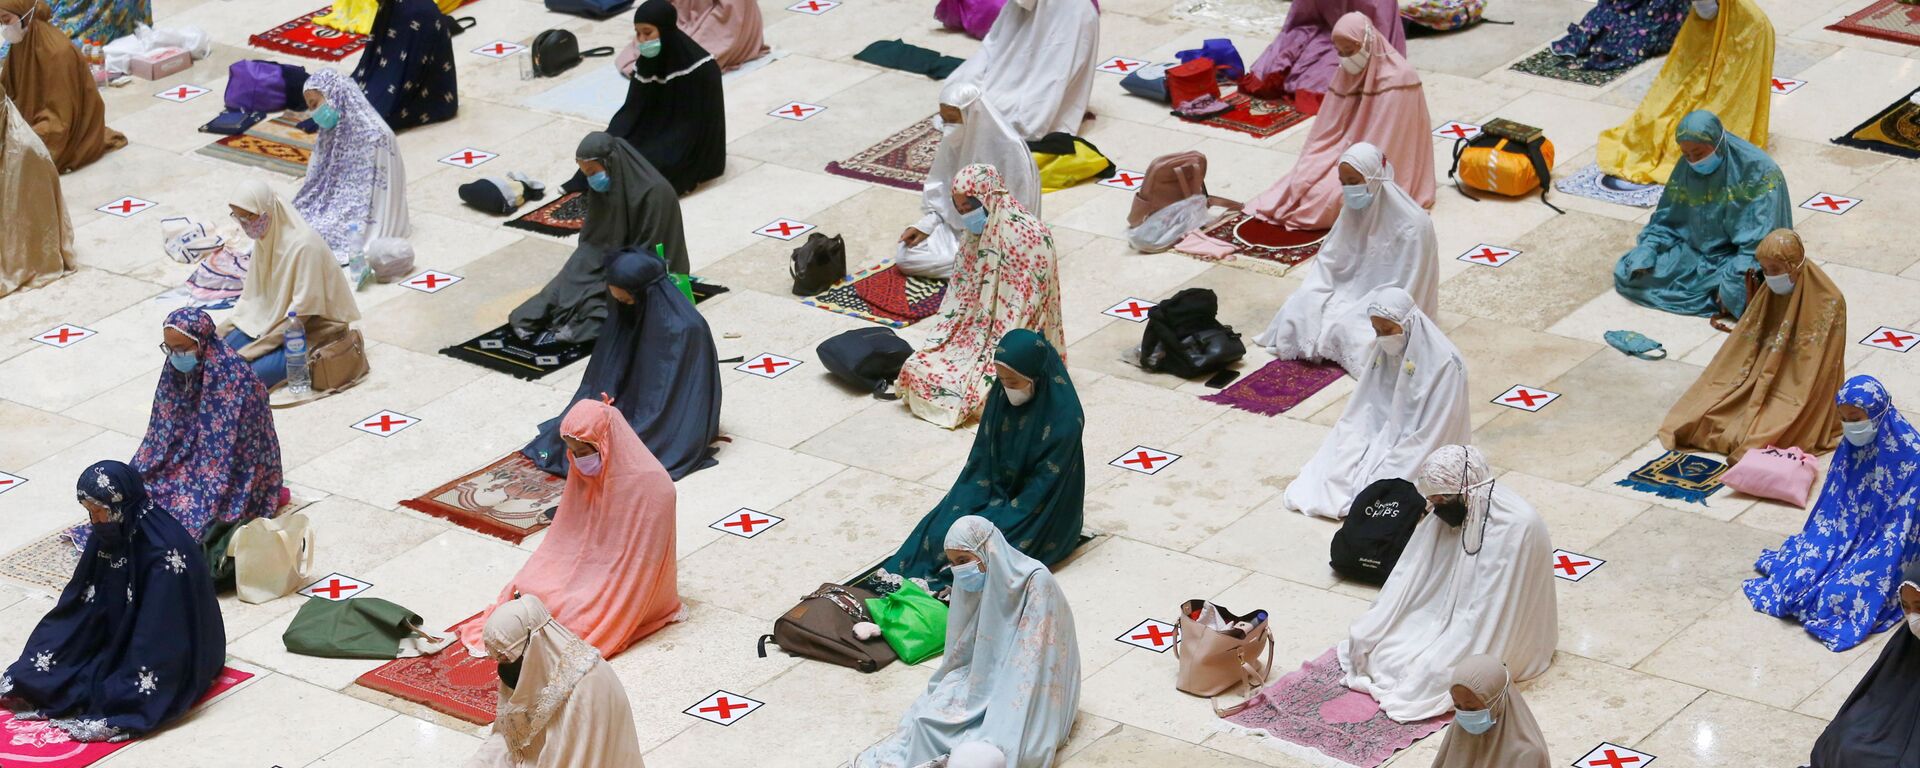 Мусульмане молятся накануне старта священного месяца Рамадан в Индонезии  - Sputnik Таджикистан, 1920, 16.04.2021